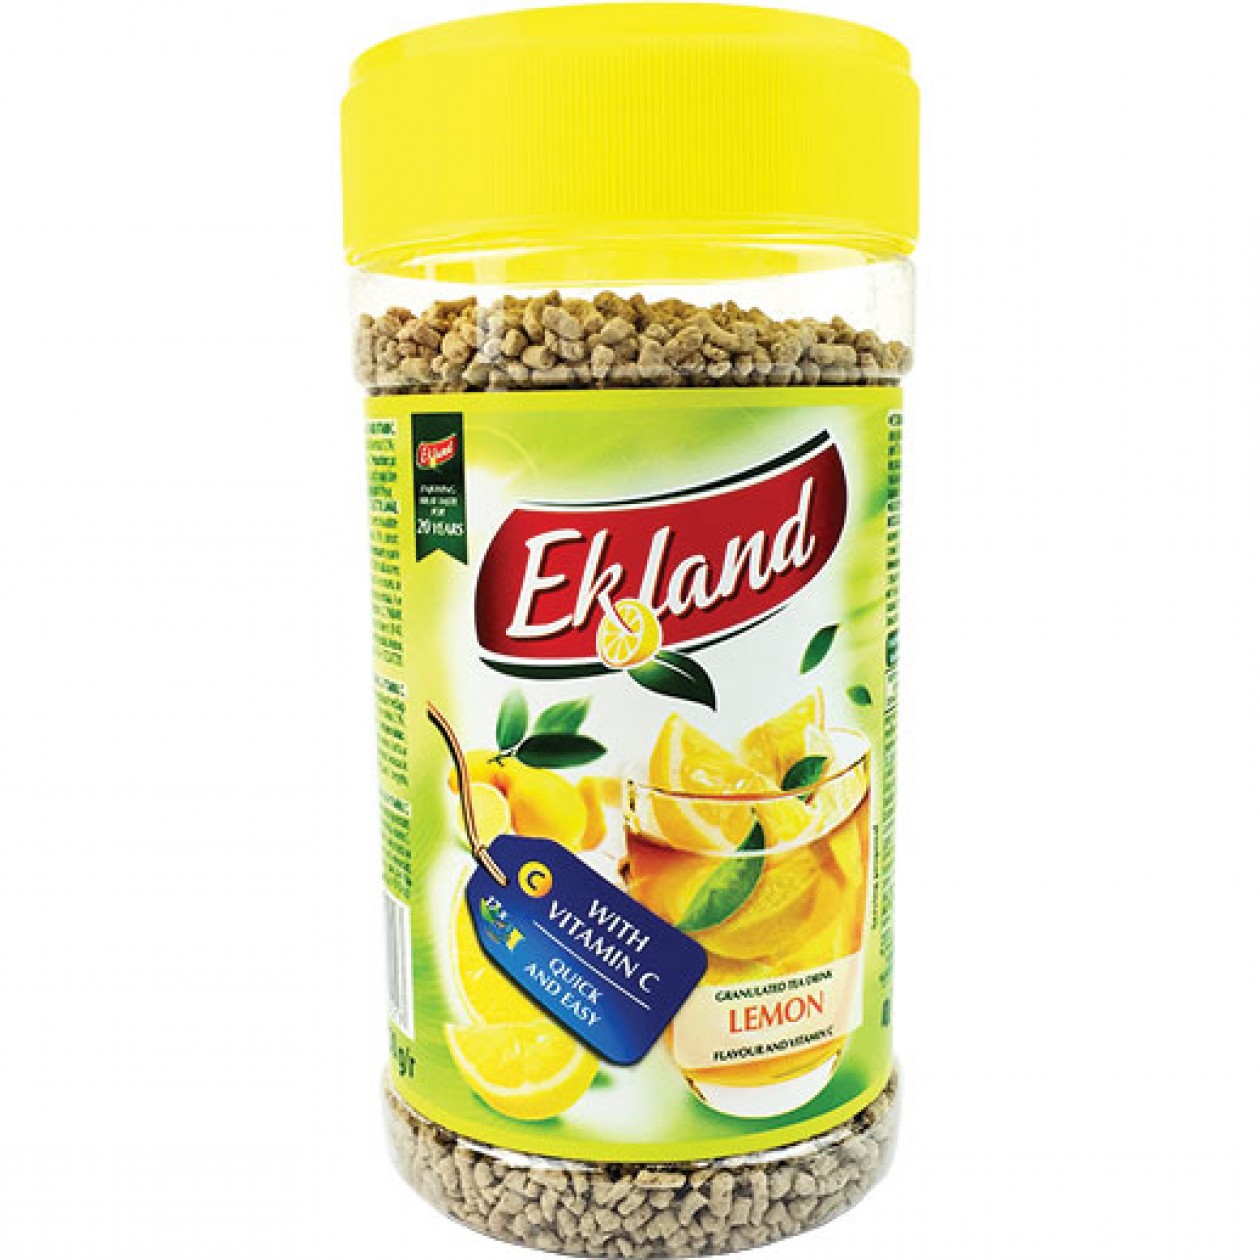 Ekoland Tea (Jar) Lemon Drink 350g